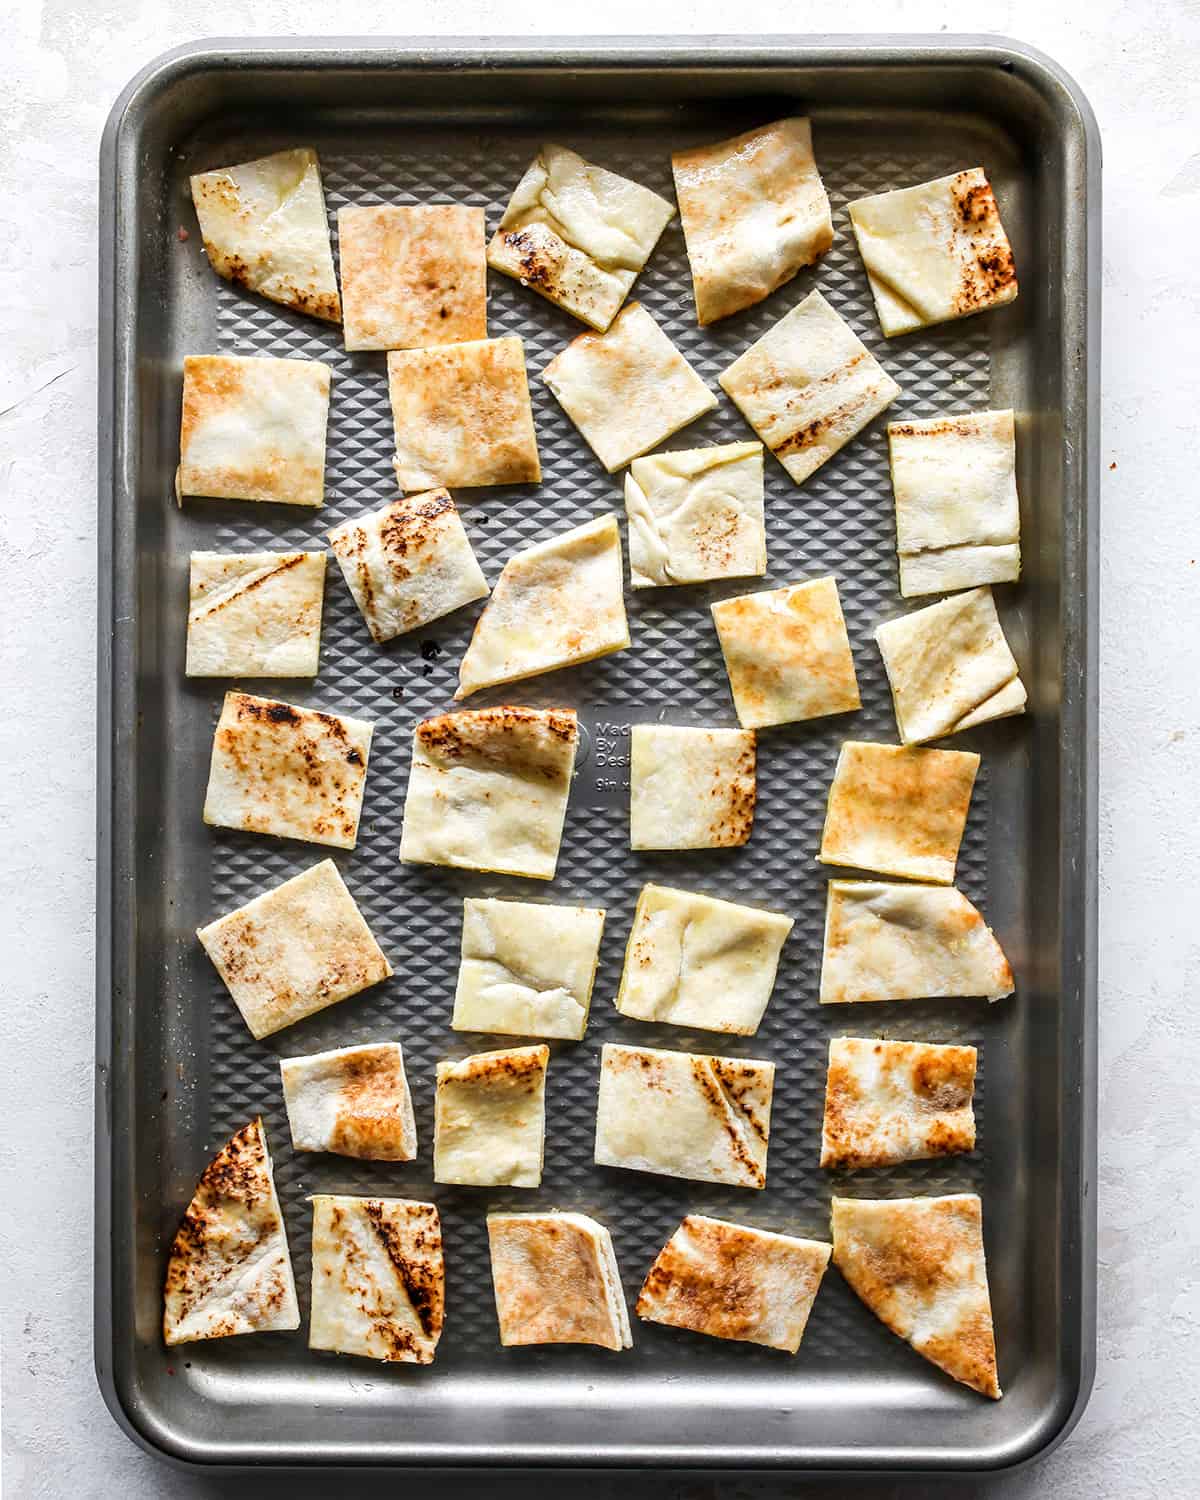 how to make greek salad - pita croutons on a baking sheet before baking